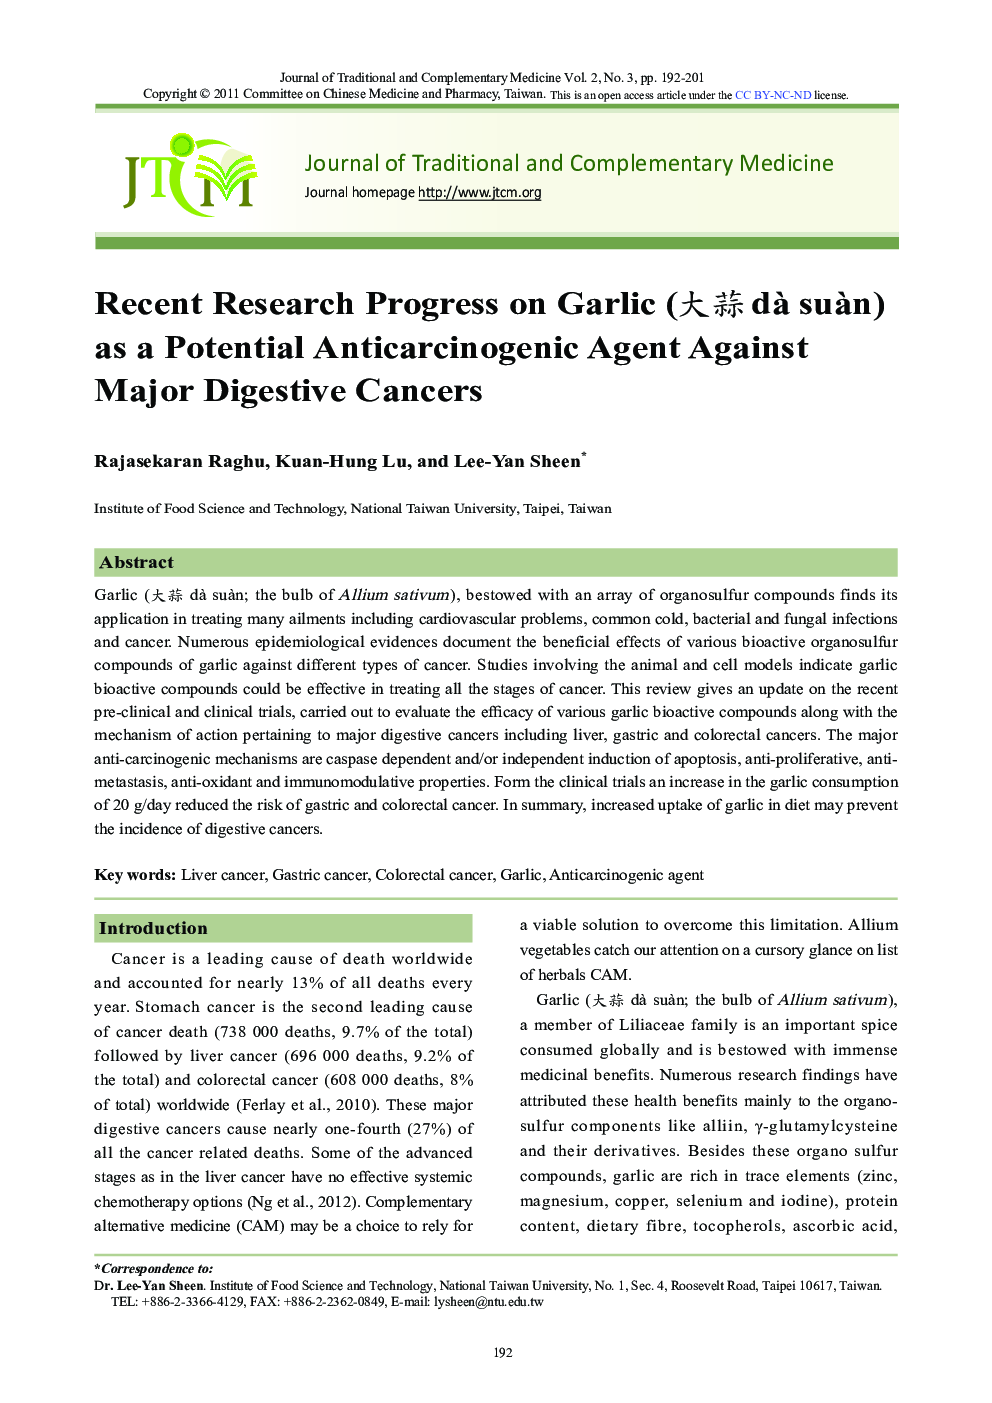 Recent Research Progress on Garlic (大蒜 dà suàn) as a Potential Anticarcinogenic Agent Against Major Digestive Cancers